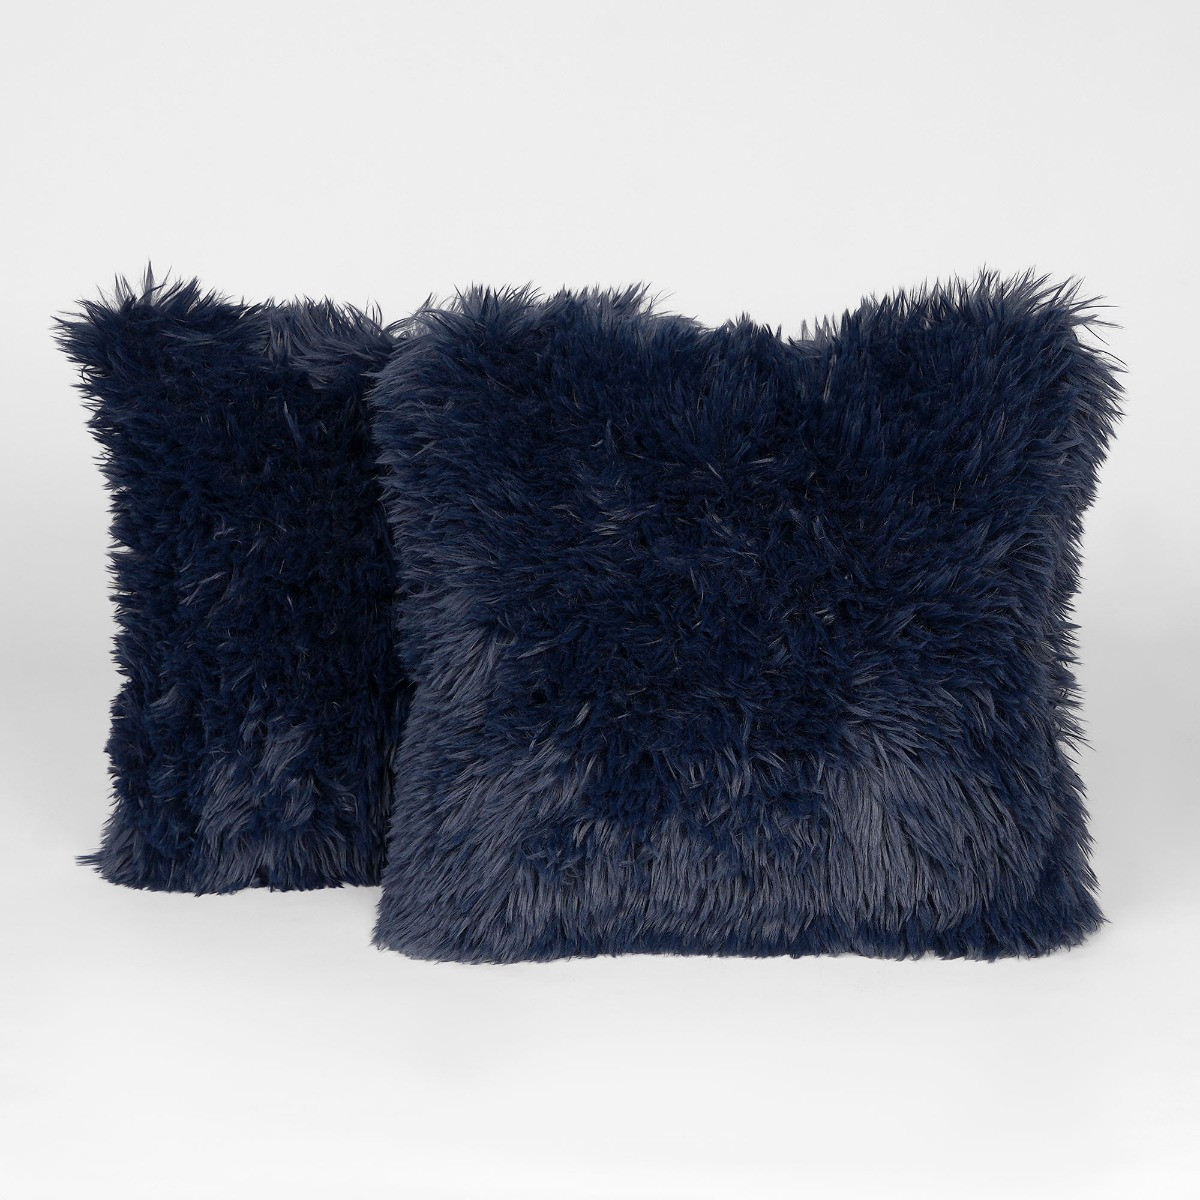 Sienna 2 Pack Mongolian Cushion Covers, Navy - 45 x 45cm>